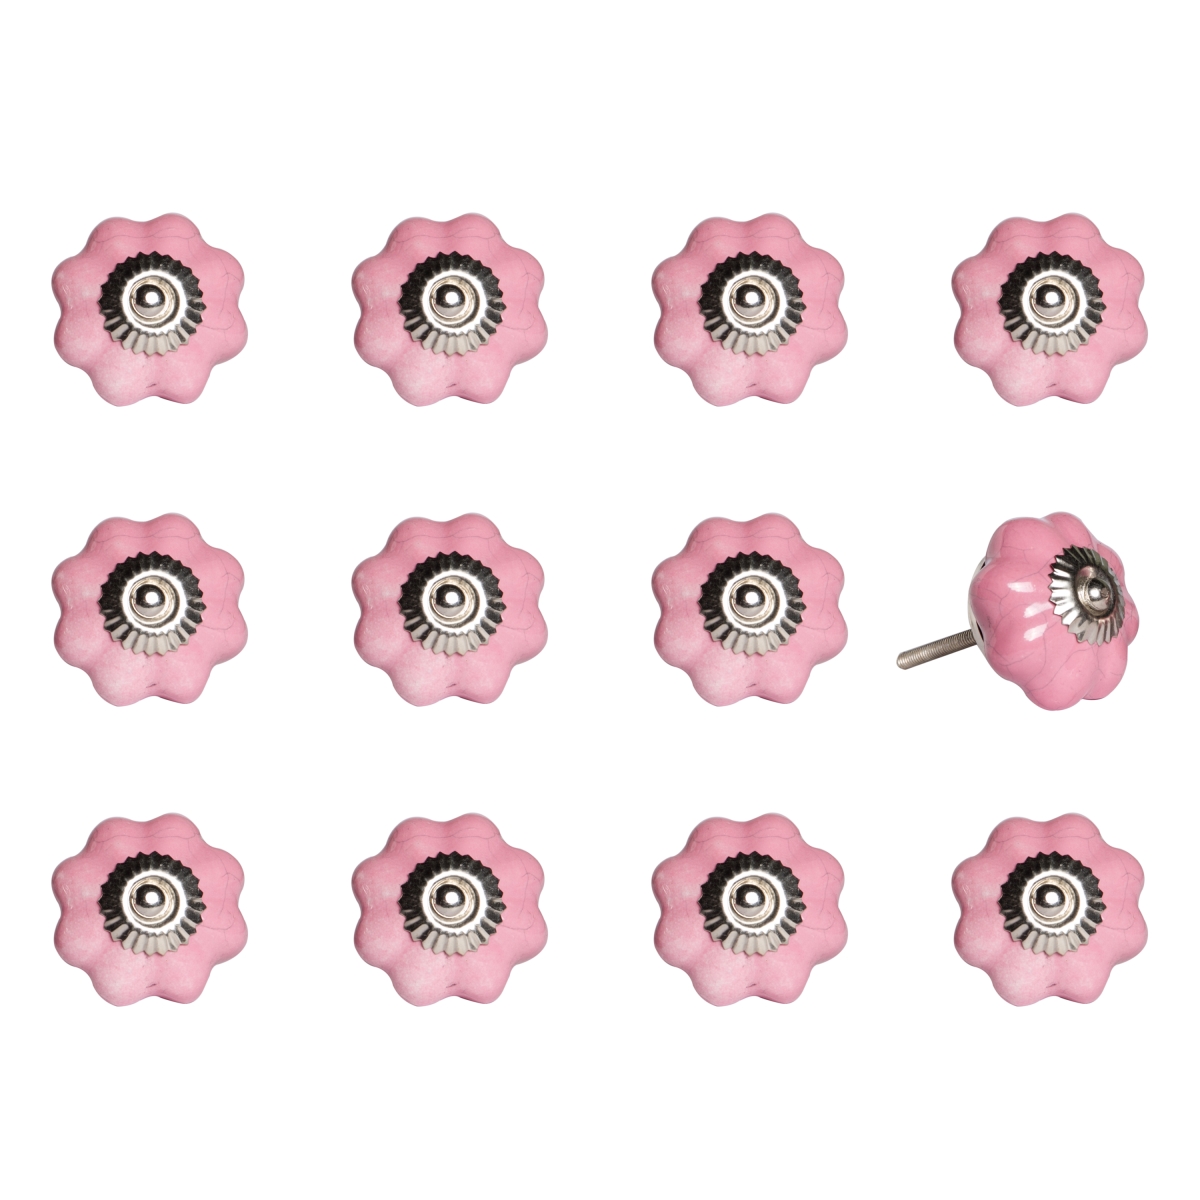 676685032805 Vintage Handpainted Flower Knob Set - Pink - Pack Of 12